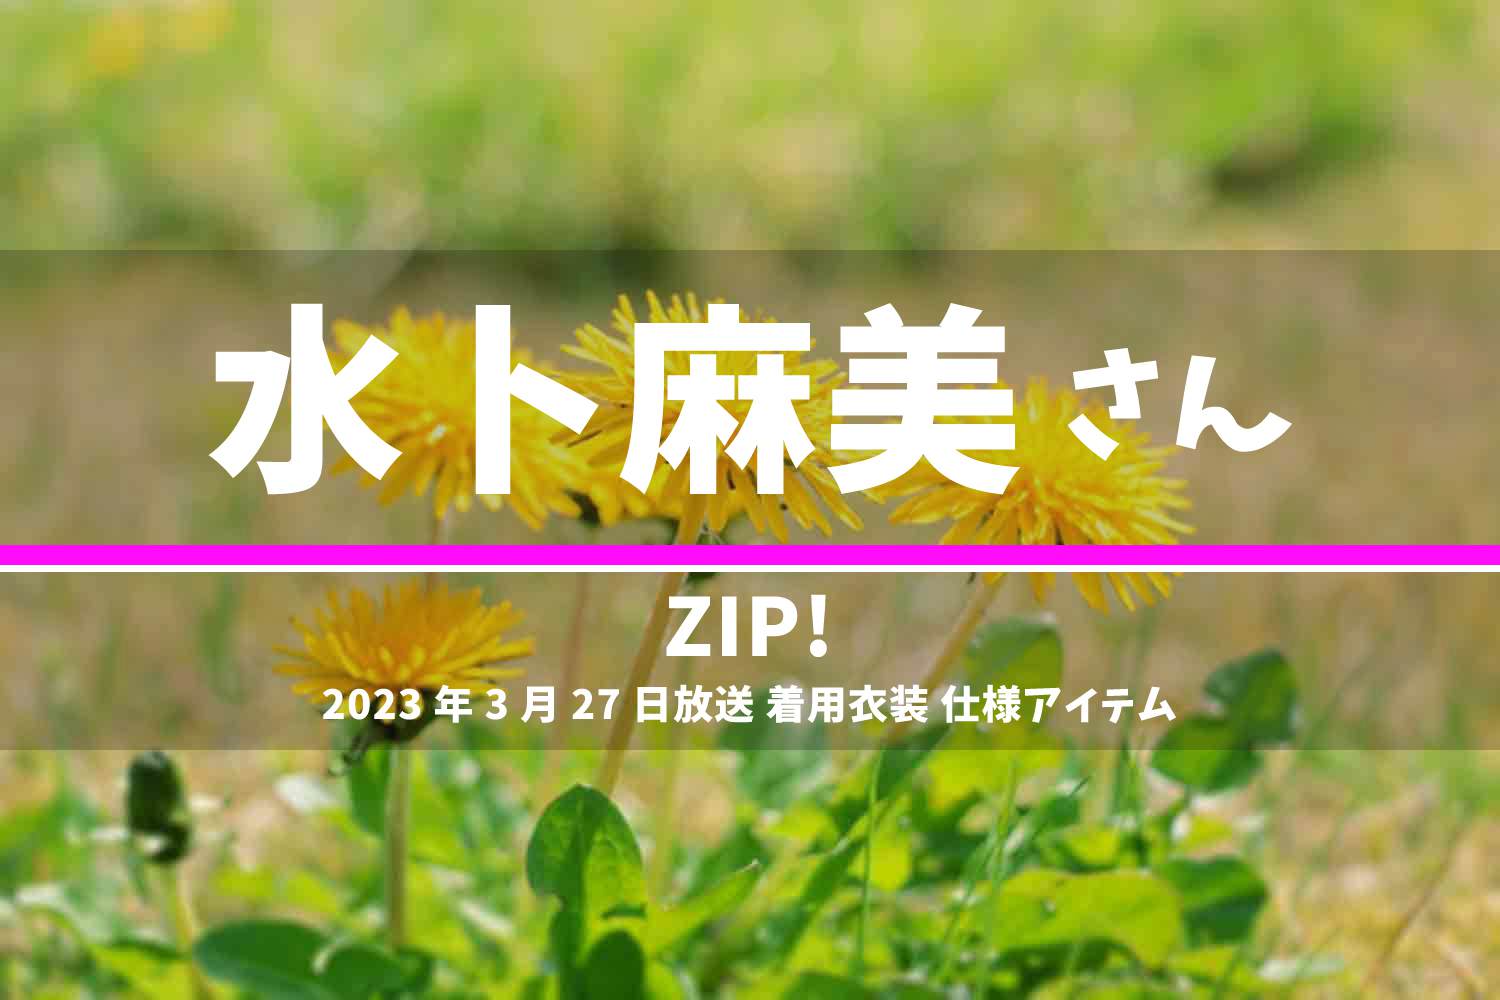 ZIP! 水卜麻美さん 番組 衣装 2023年3月27日放送